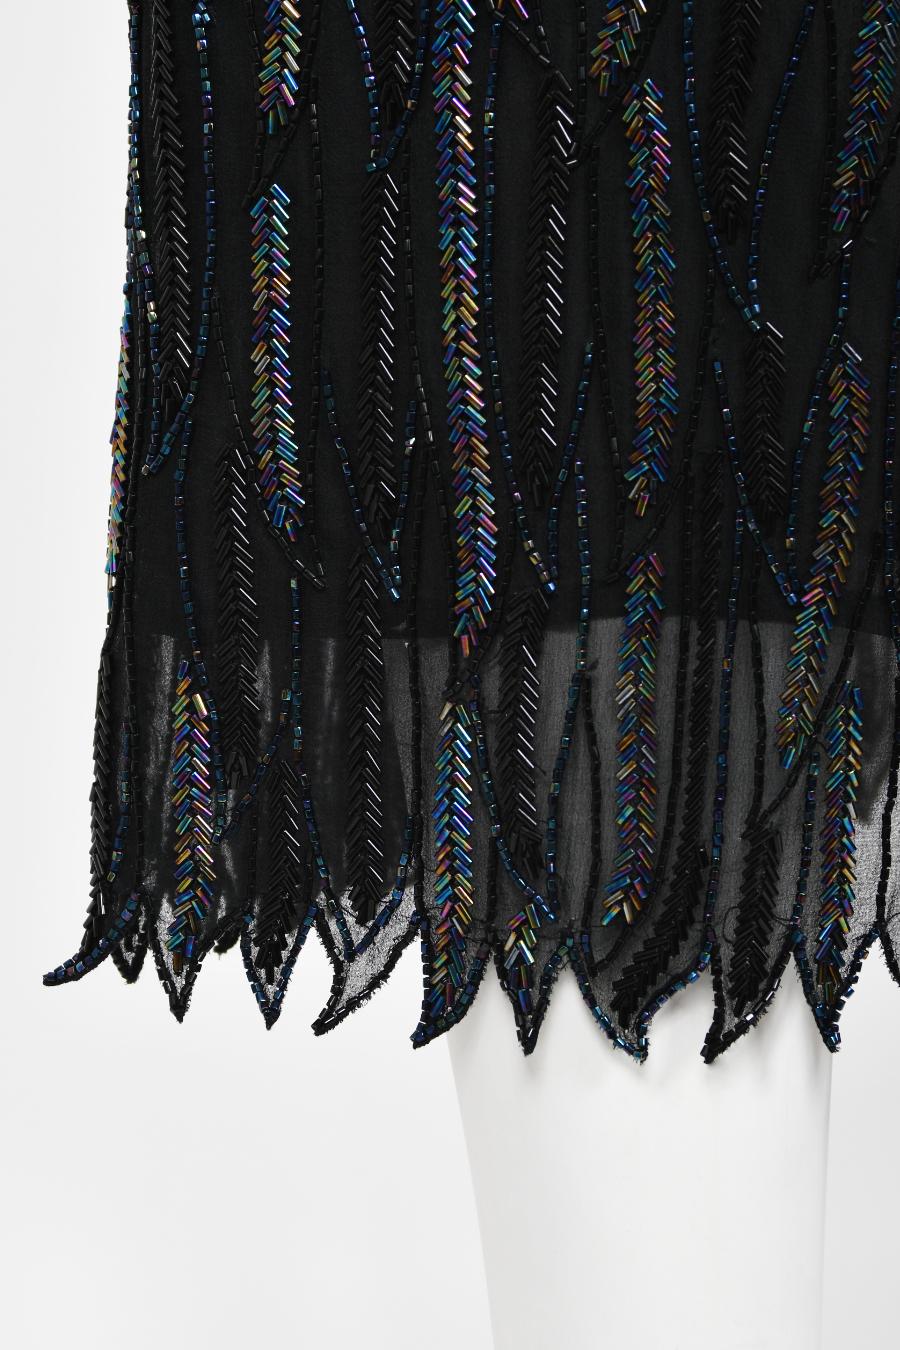 Vintage 1970's Halston Couture Iridescent Beaded Black Silk One-Shoulder Dress  For Sale 1